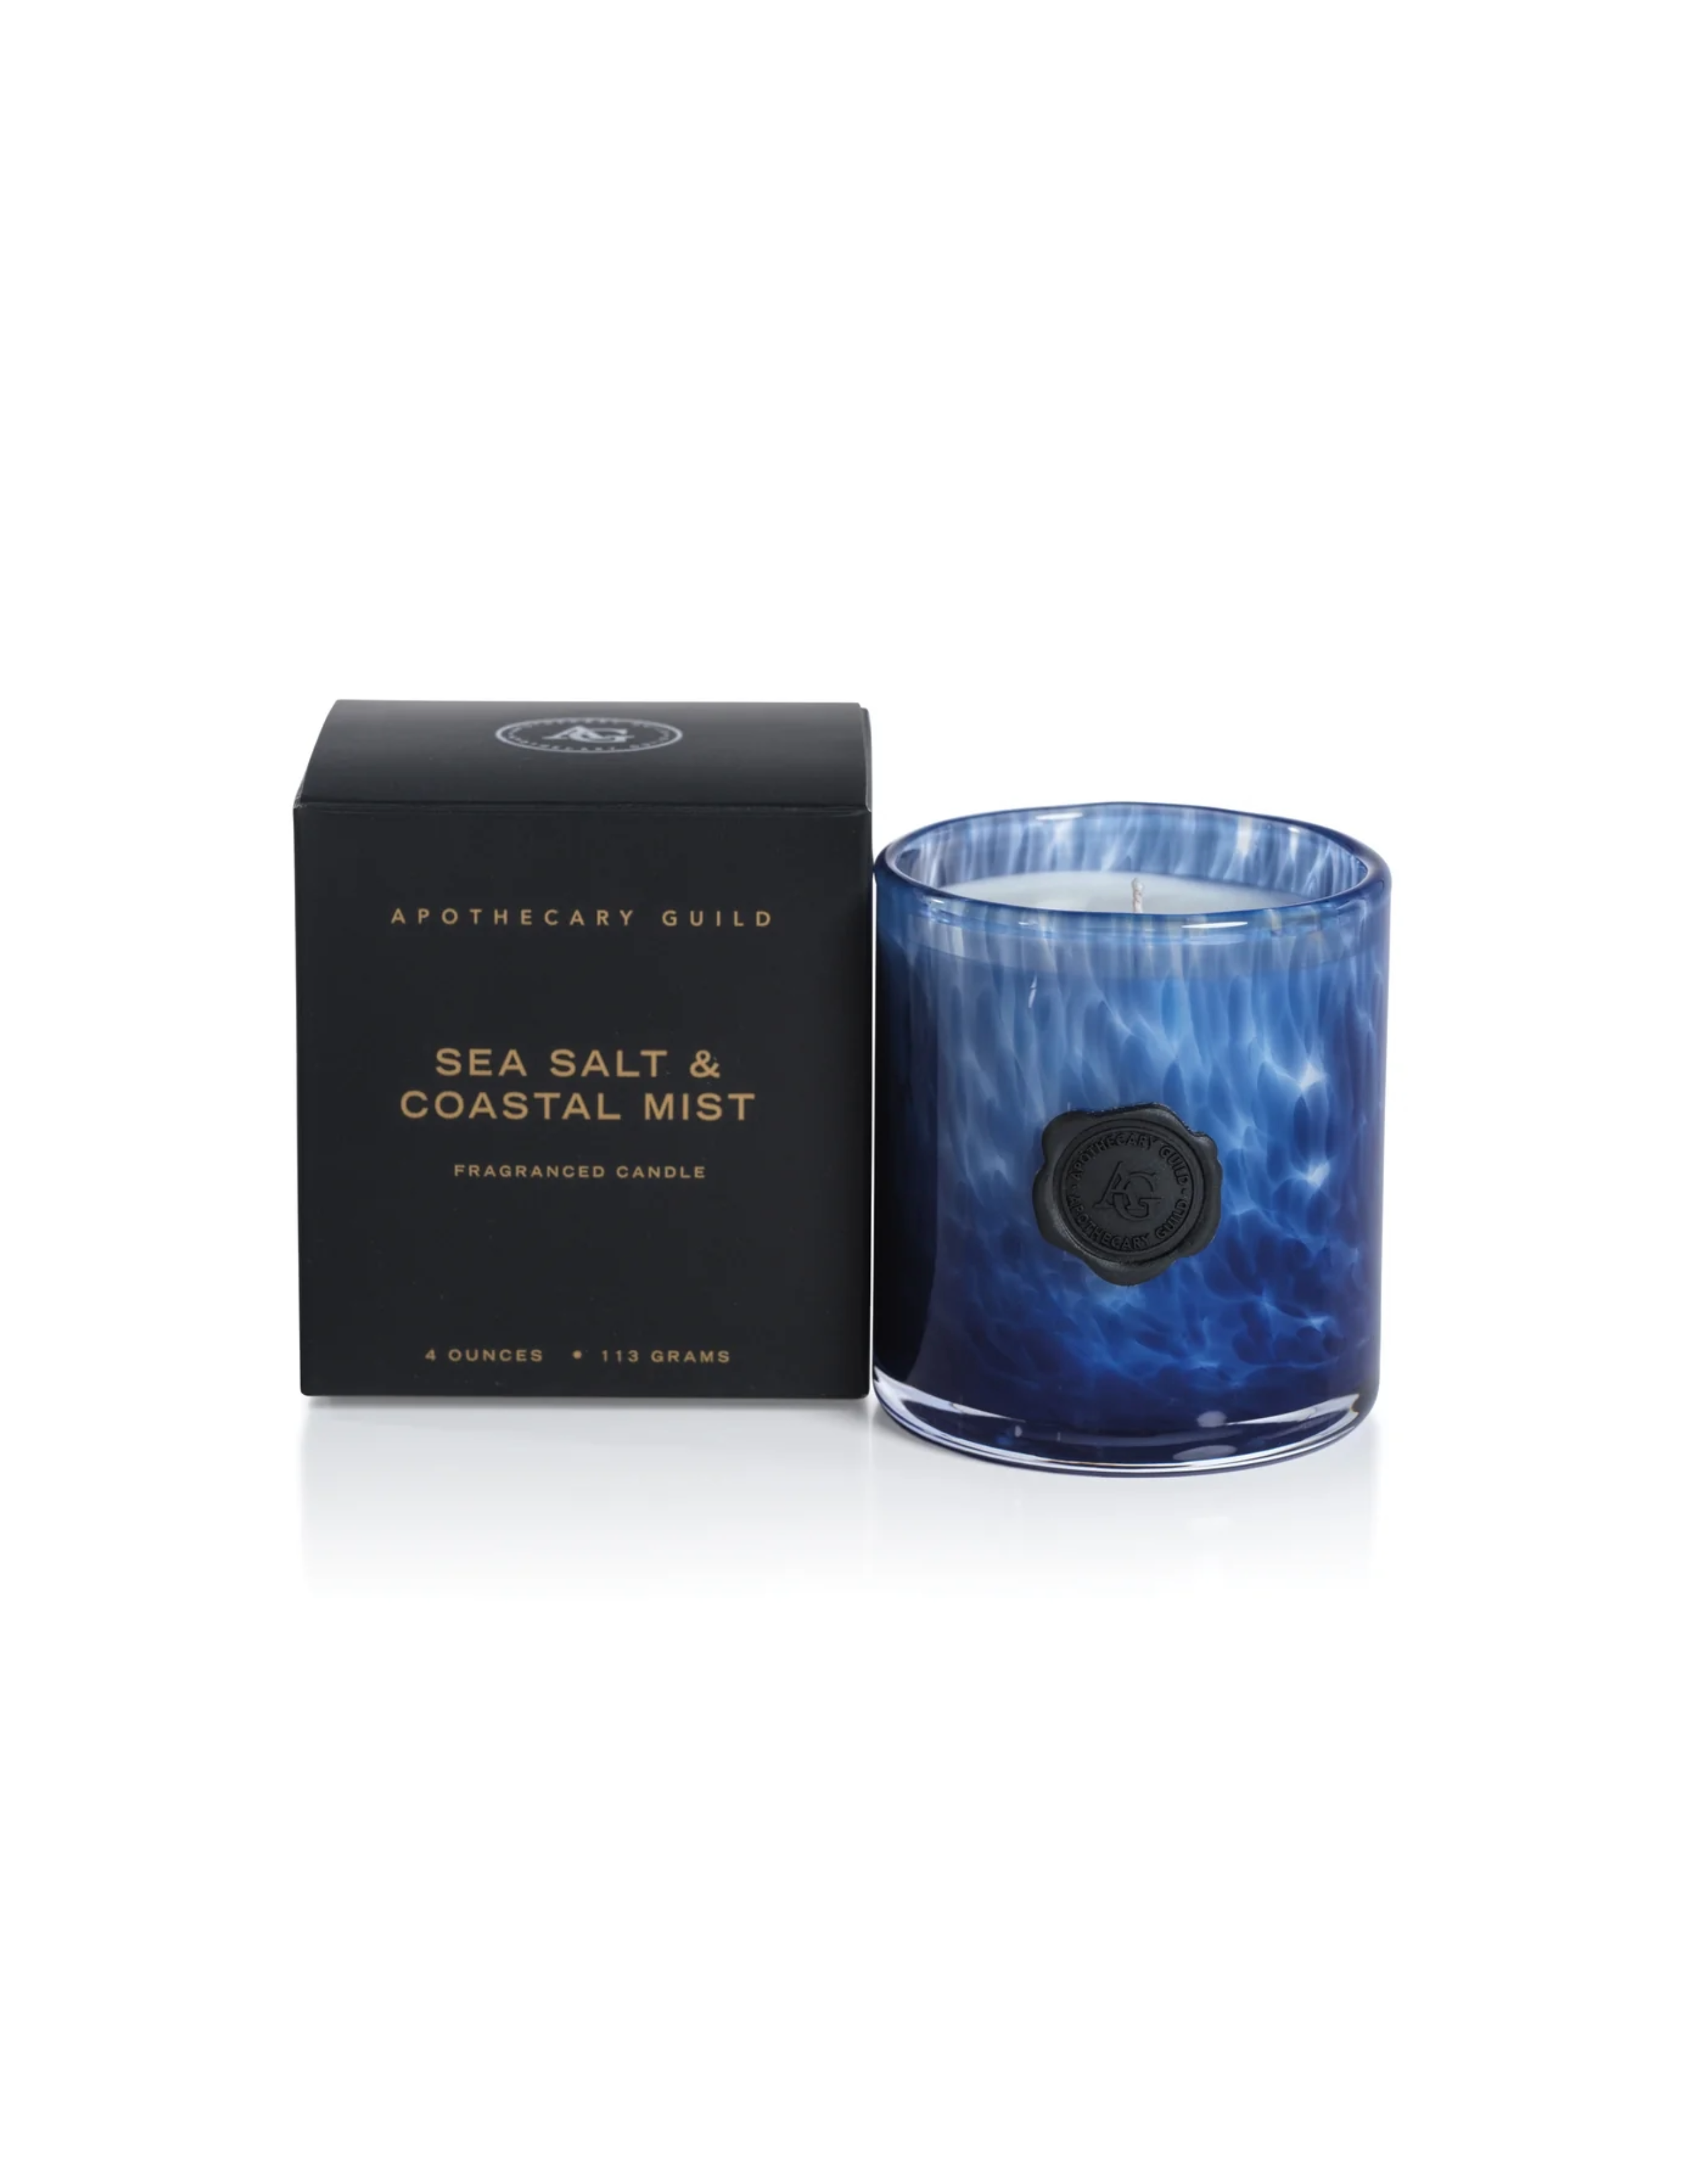 Opal Glass Mini Candle Jar in Gift Box - Sea Salt & Coastal Mist